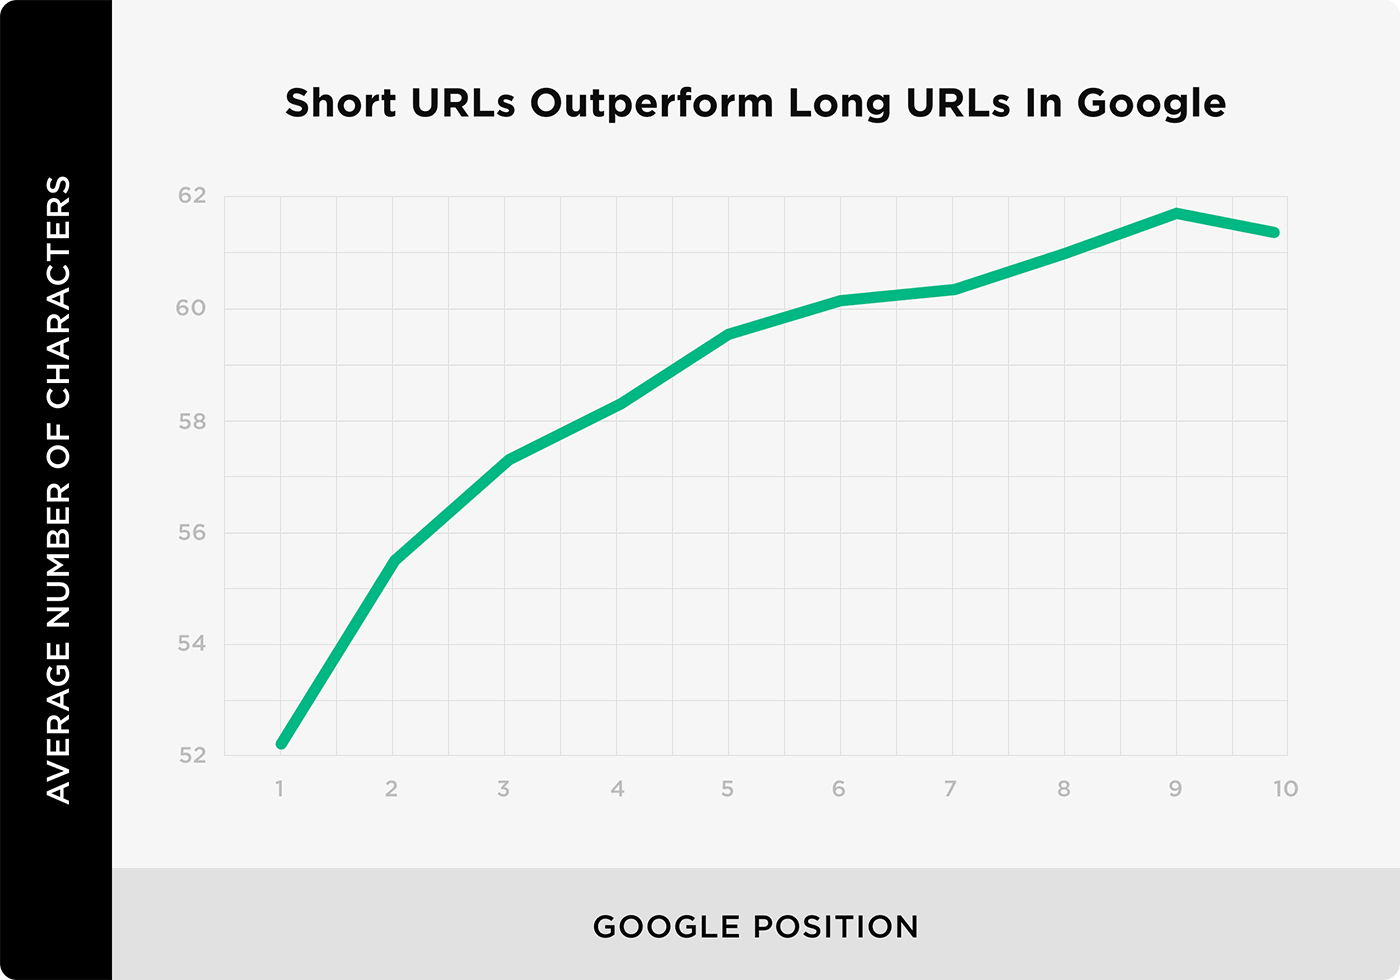 Short URLs outperform long URLs in Google